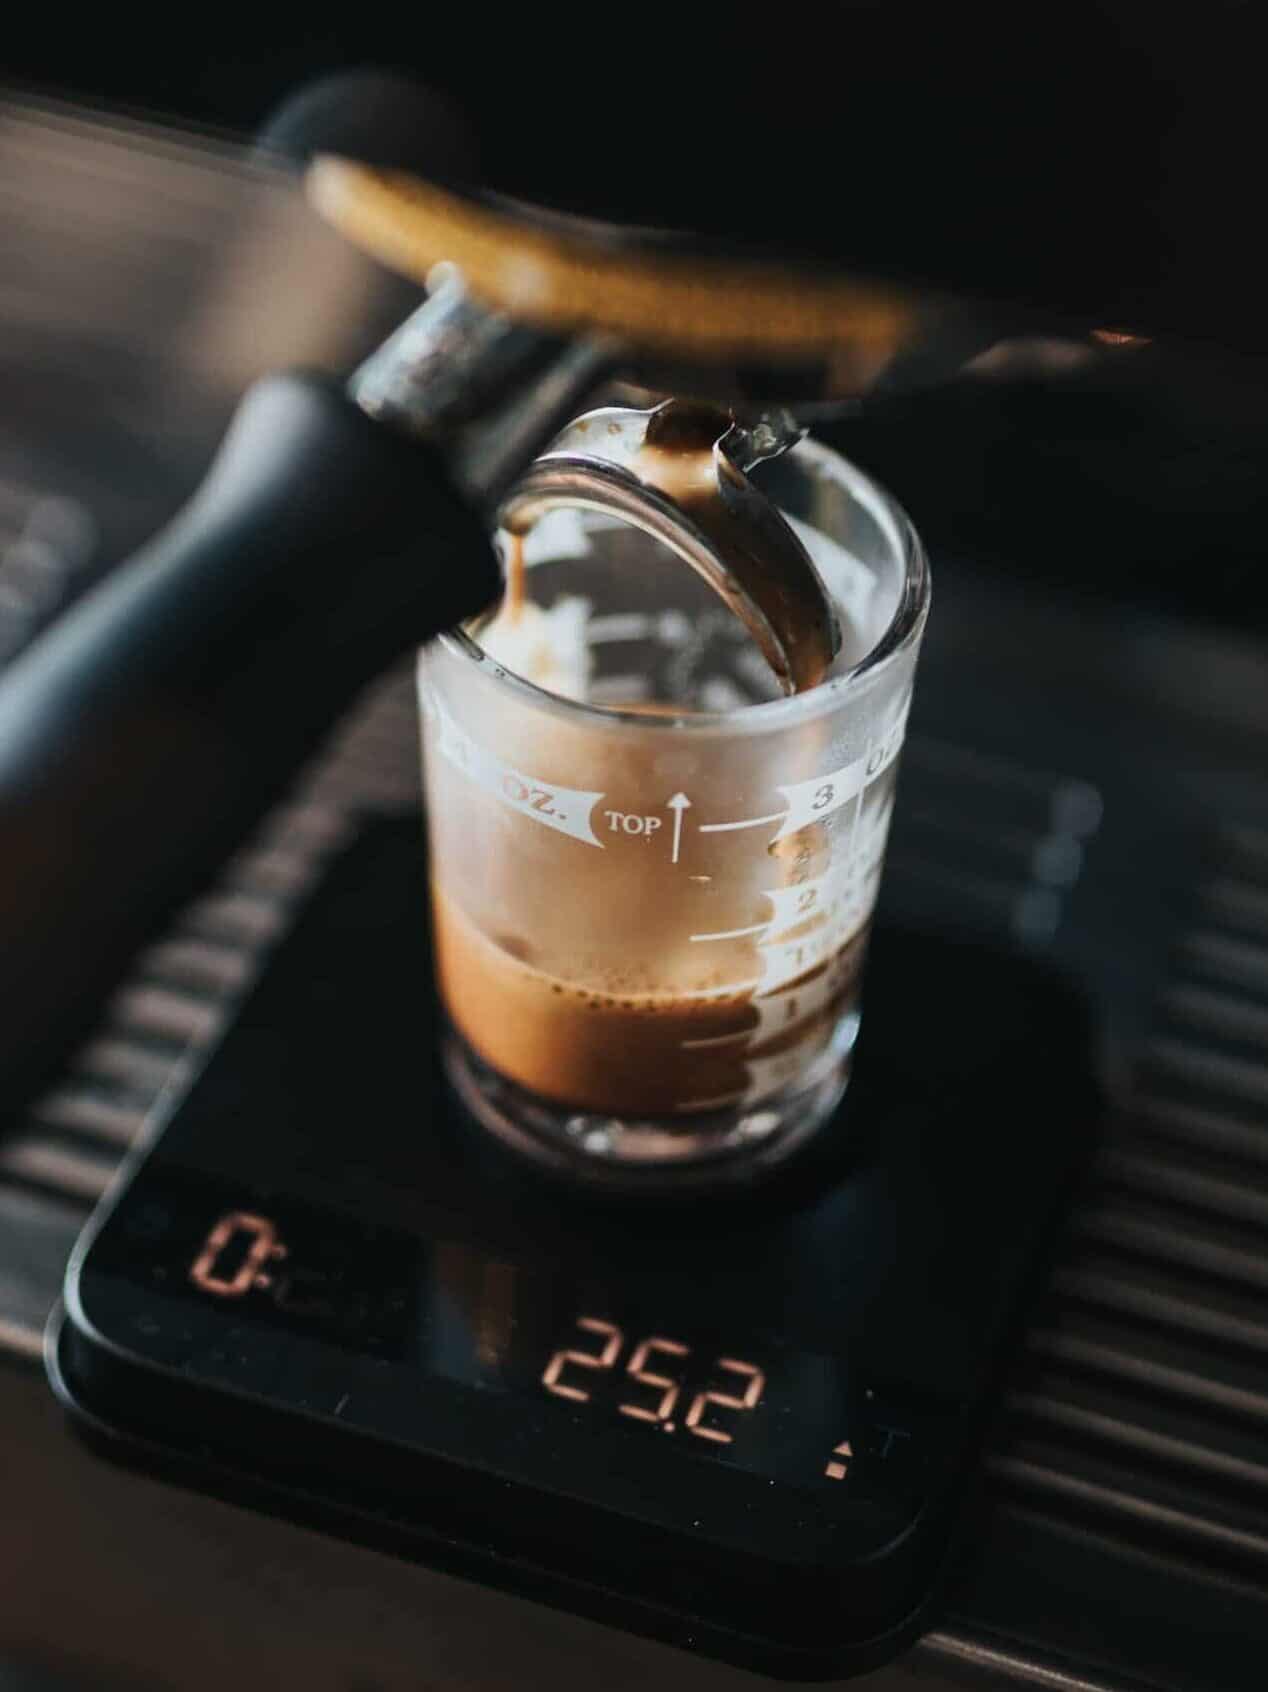 espresso shot being pulled
